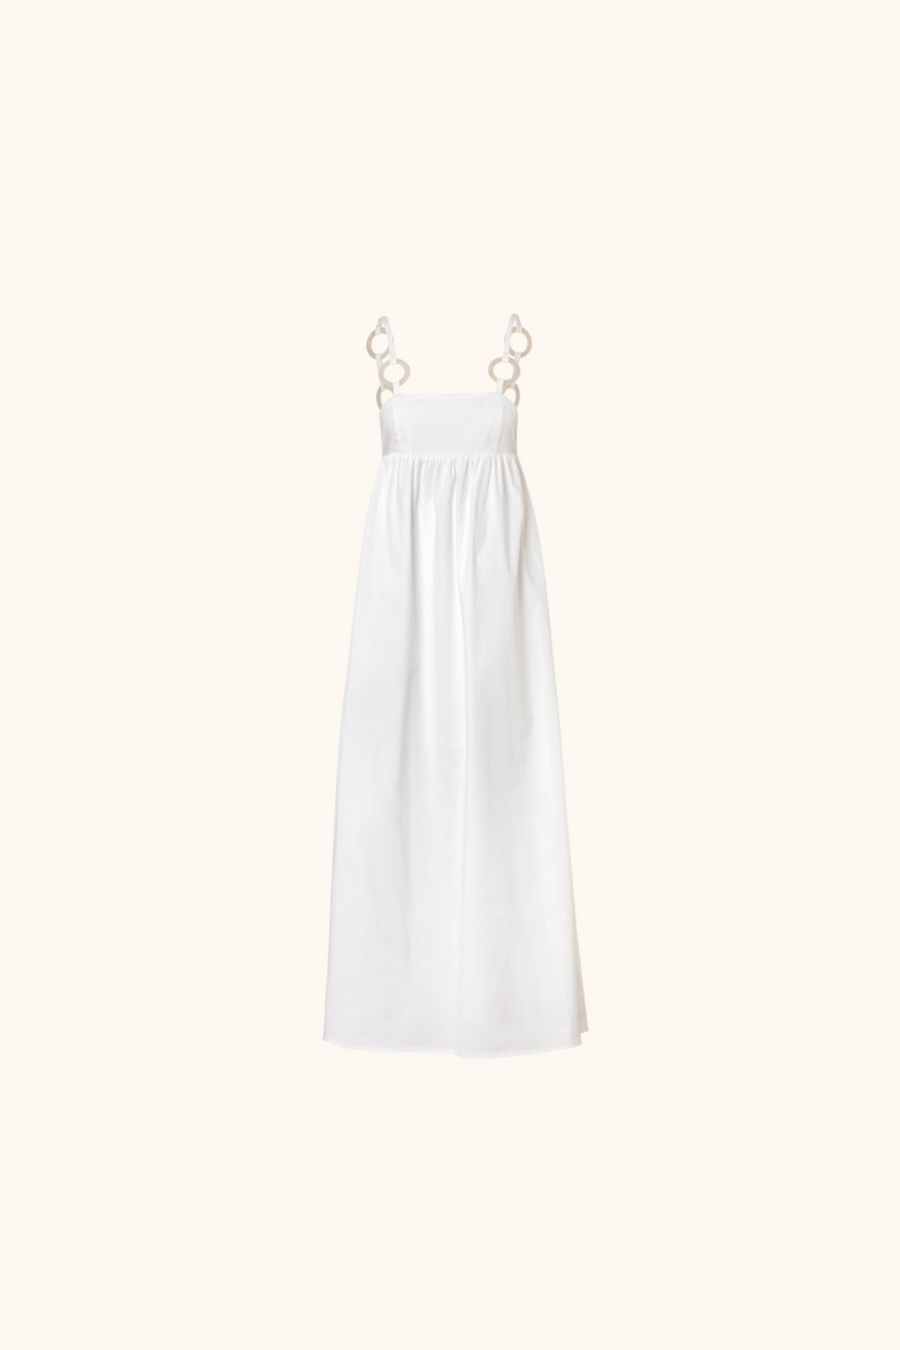 'Bahama White' Maxi Dress